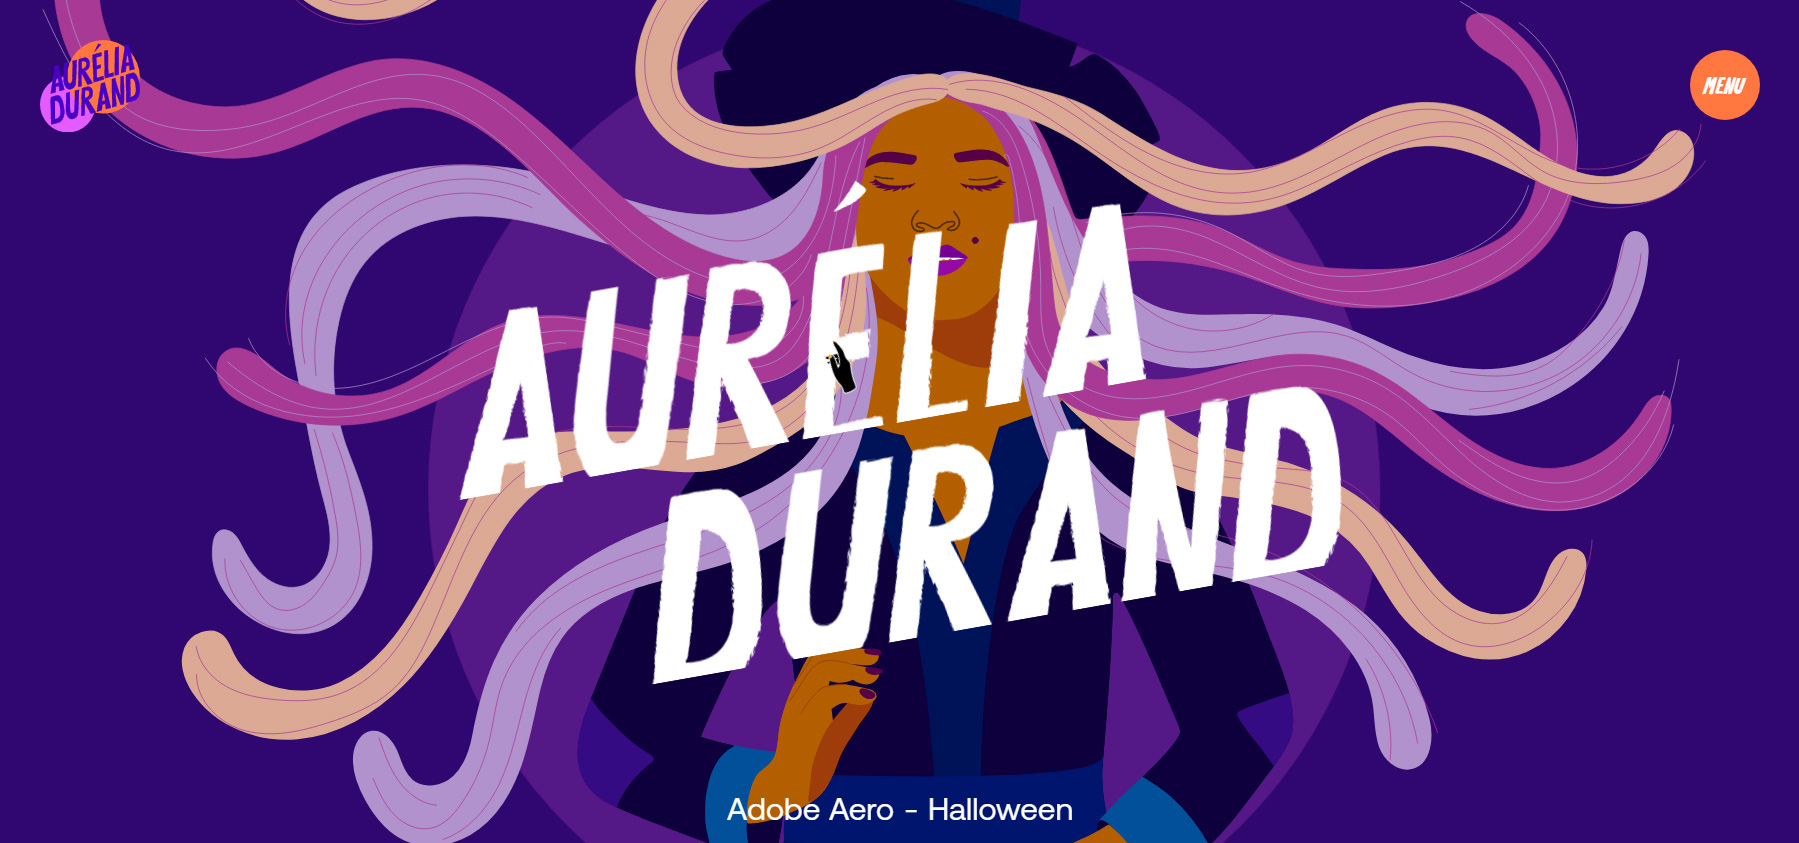 Aurélia Durand - Website of the Day